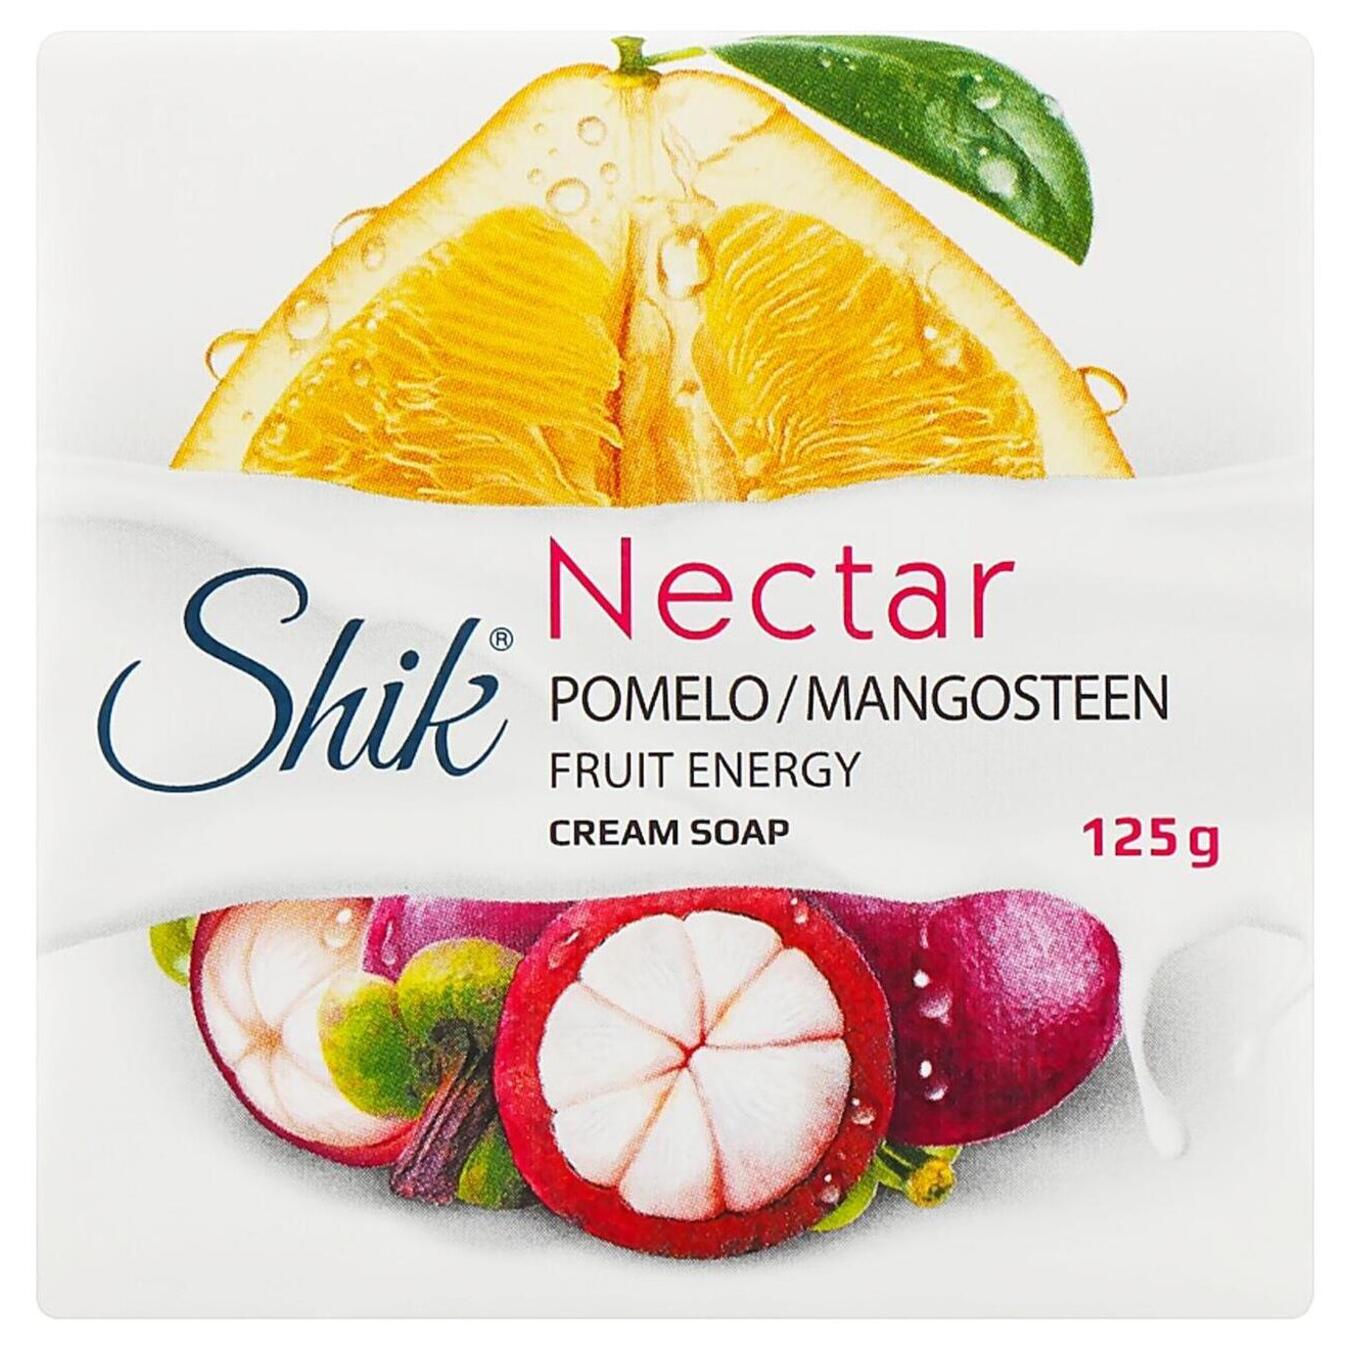 Cream-soap Shik nectar pomelo and mangosteen 125g